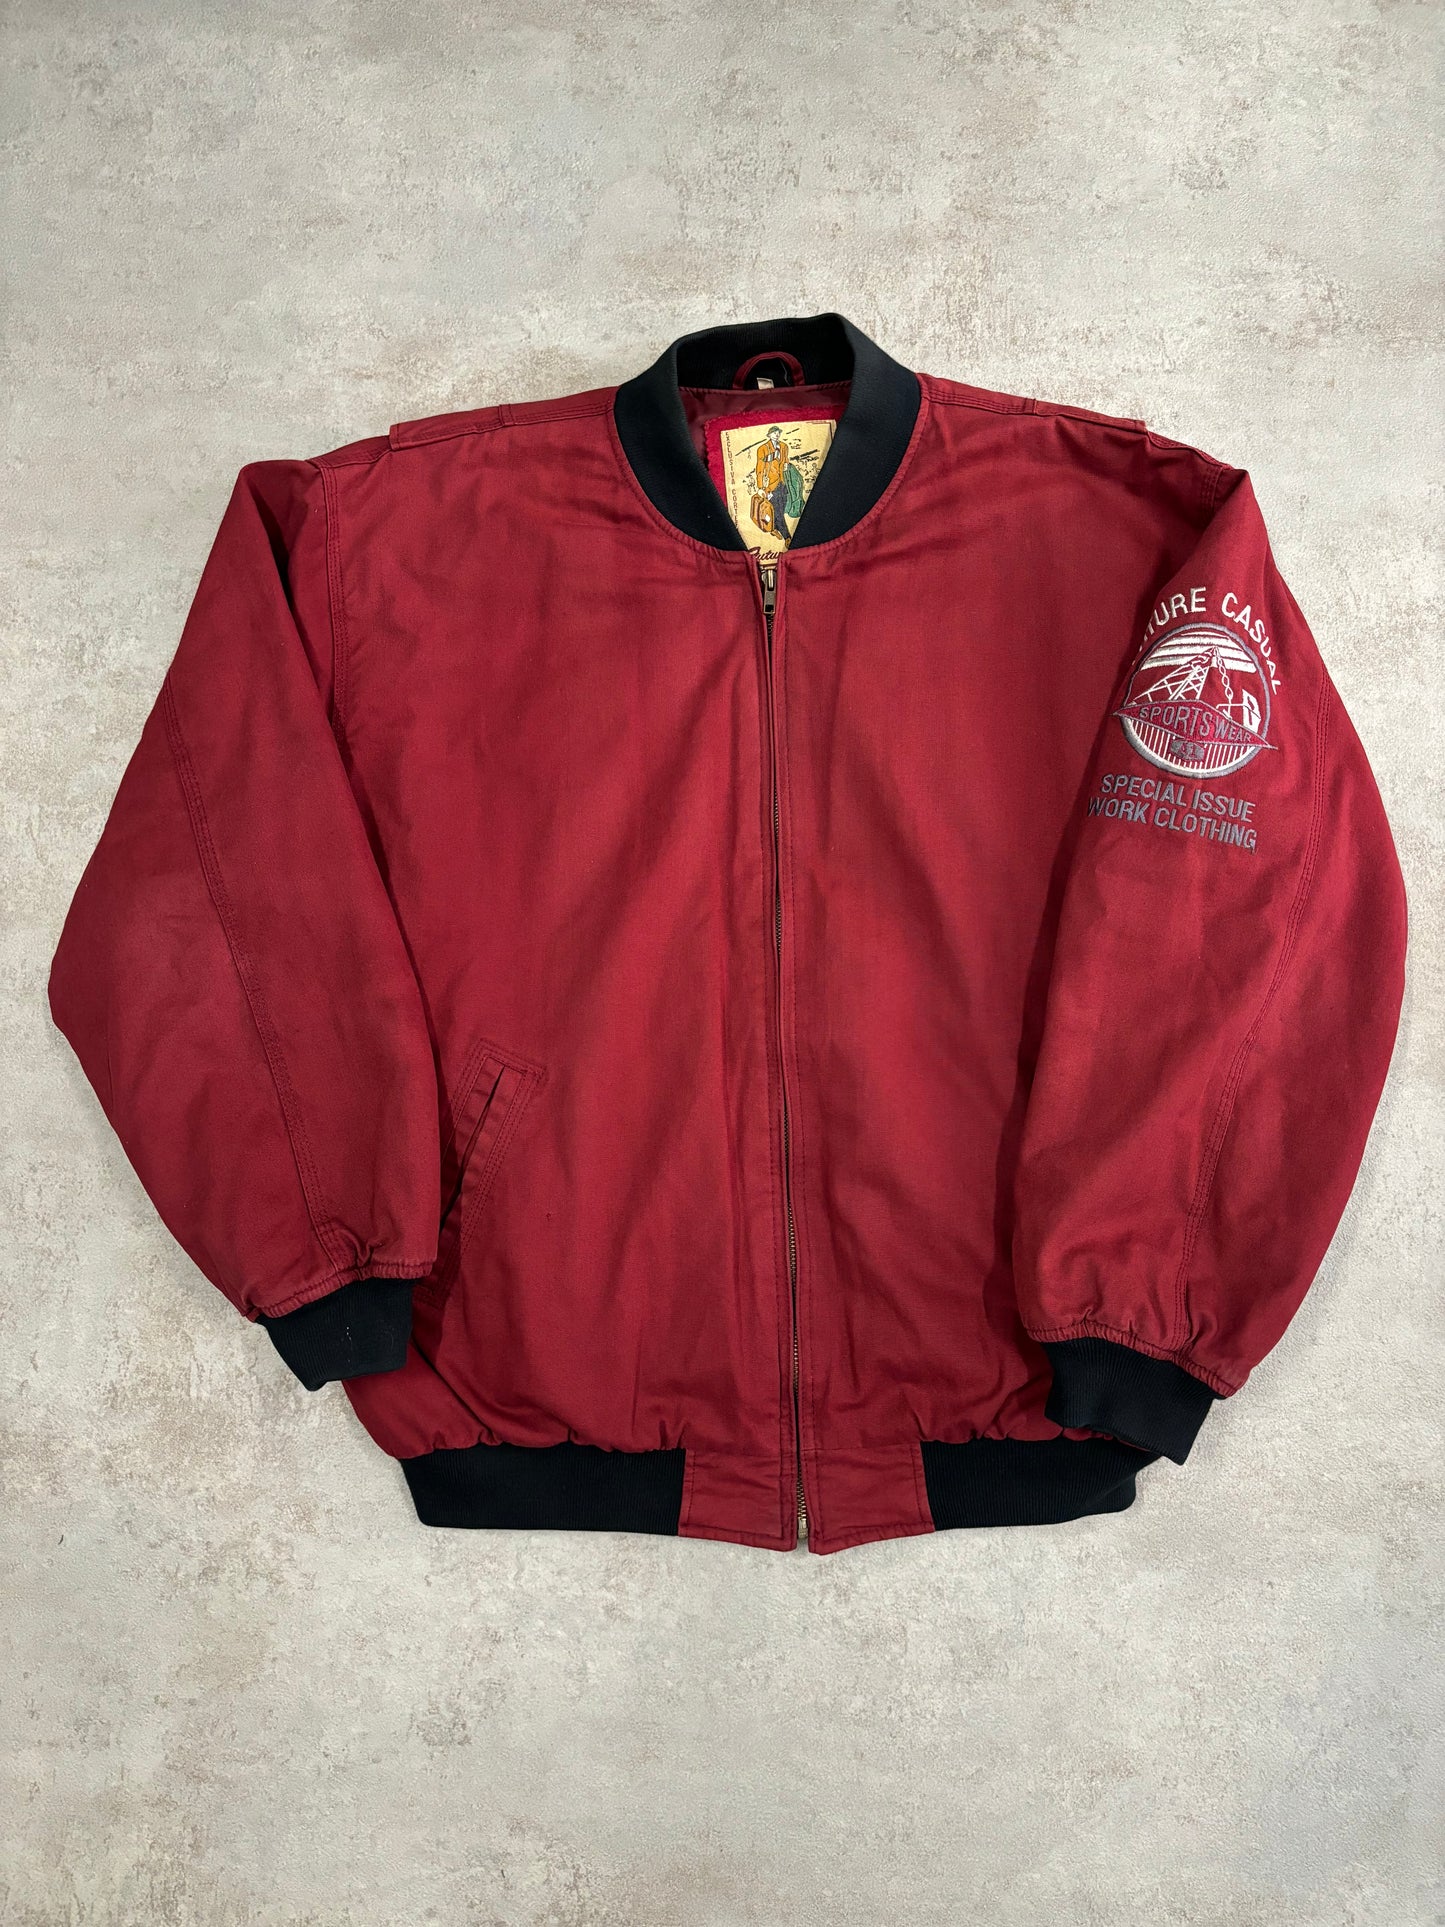 Cortefiel 90s Vintage Worker Jacket - XL